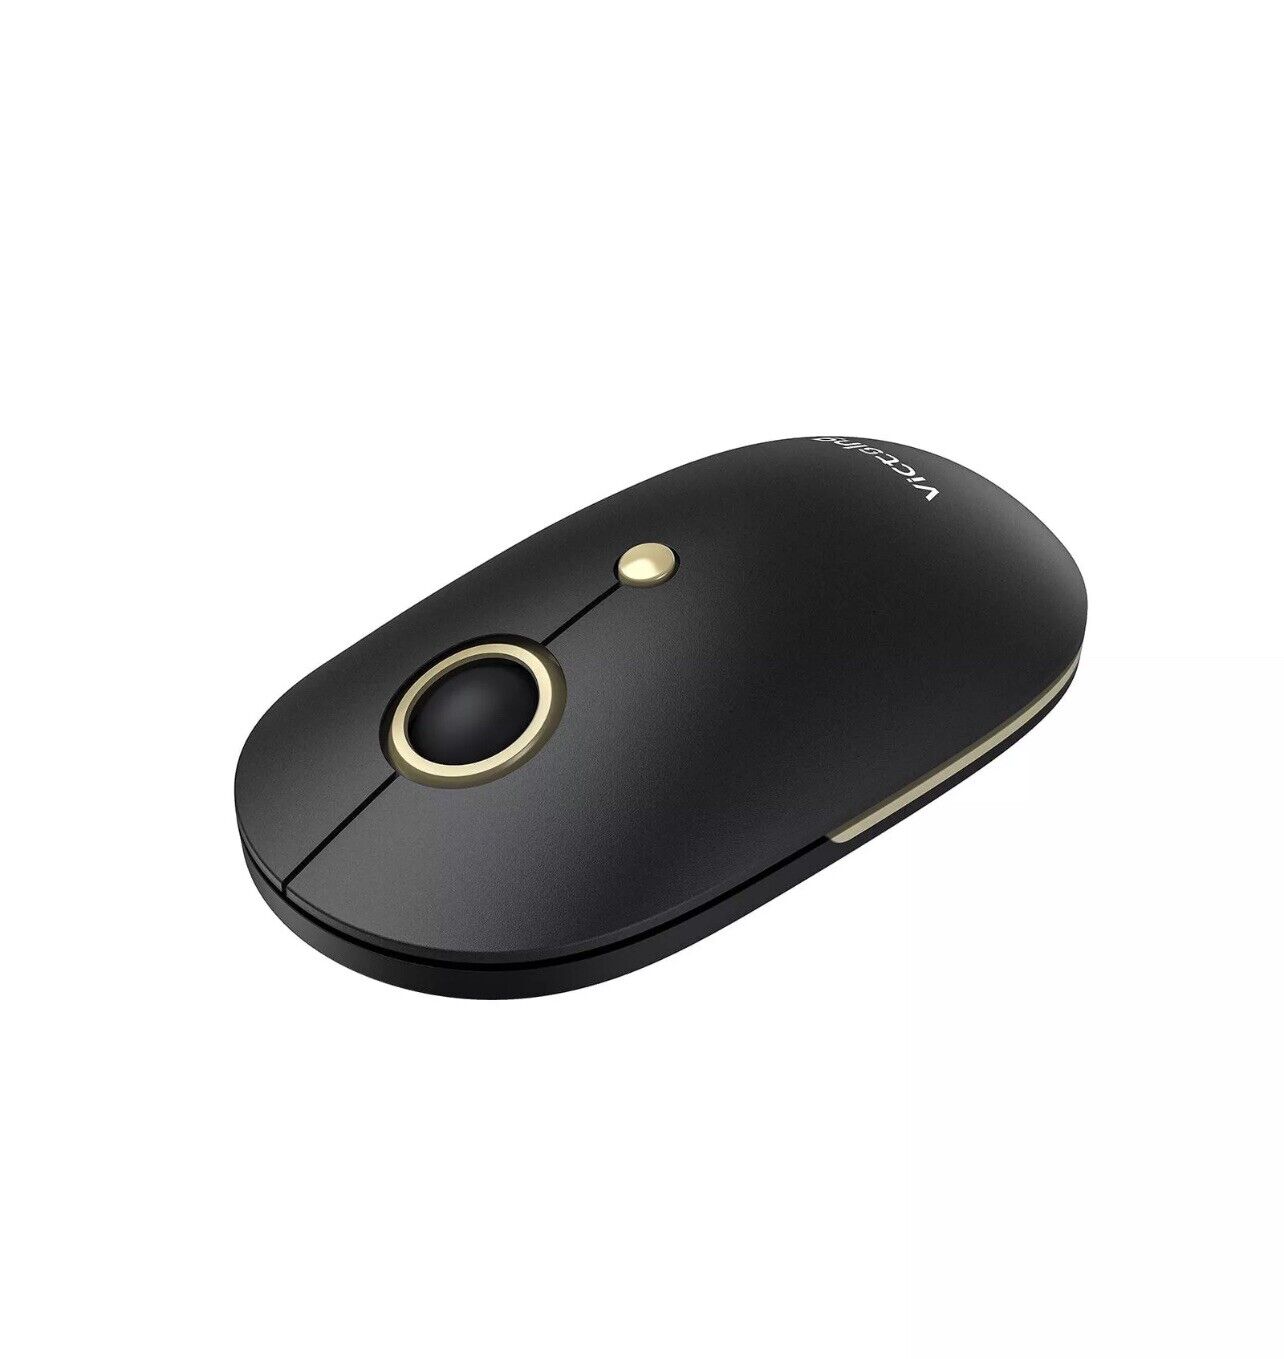 VictSing 2.4G Slim Wireless Mouse Silent Computer 5 Level Adjustable DPI Black